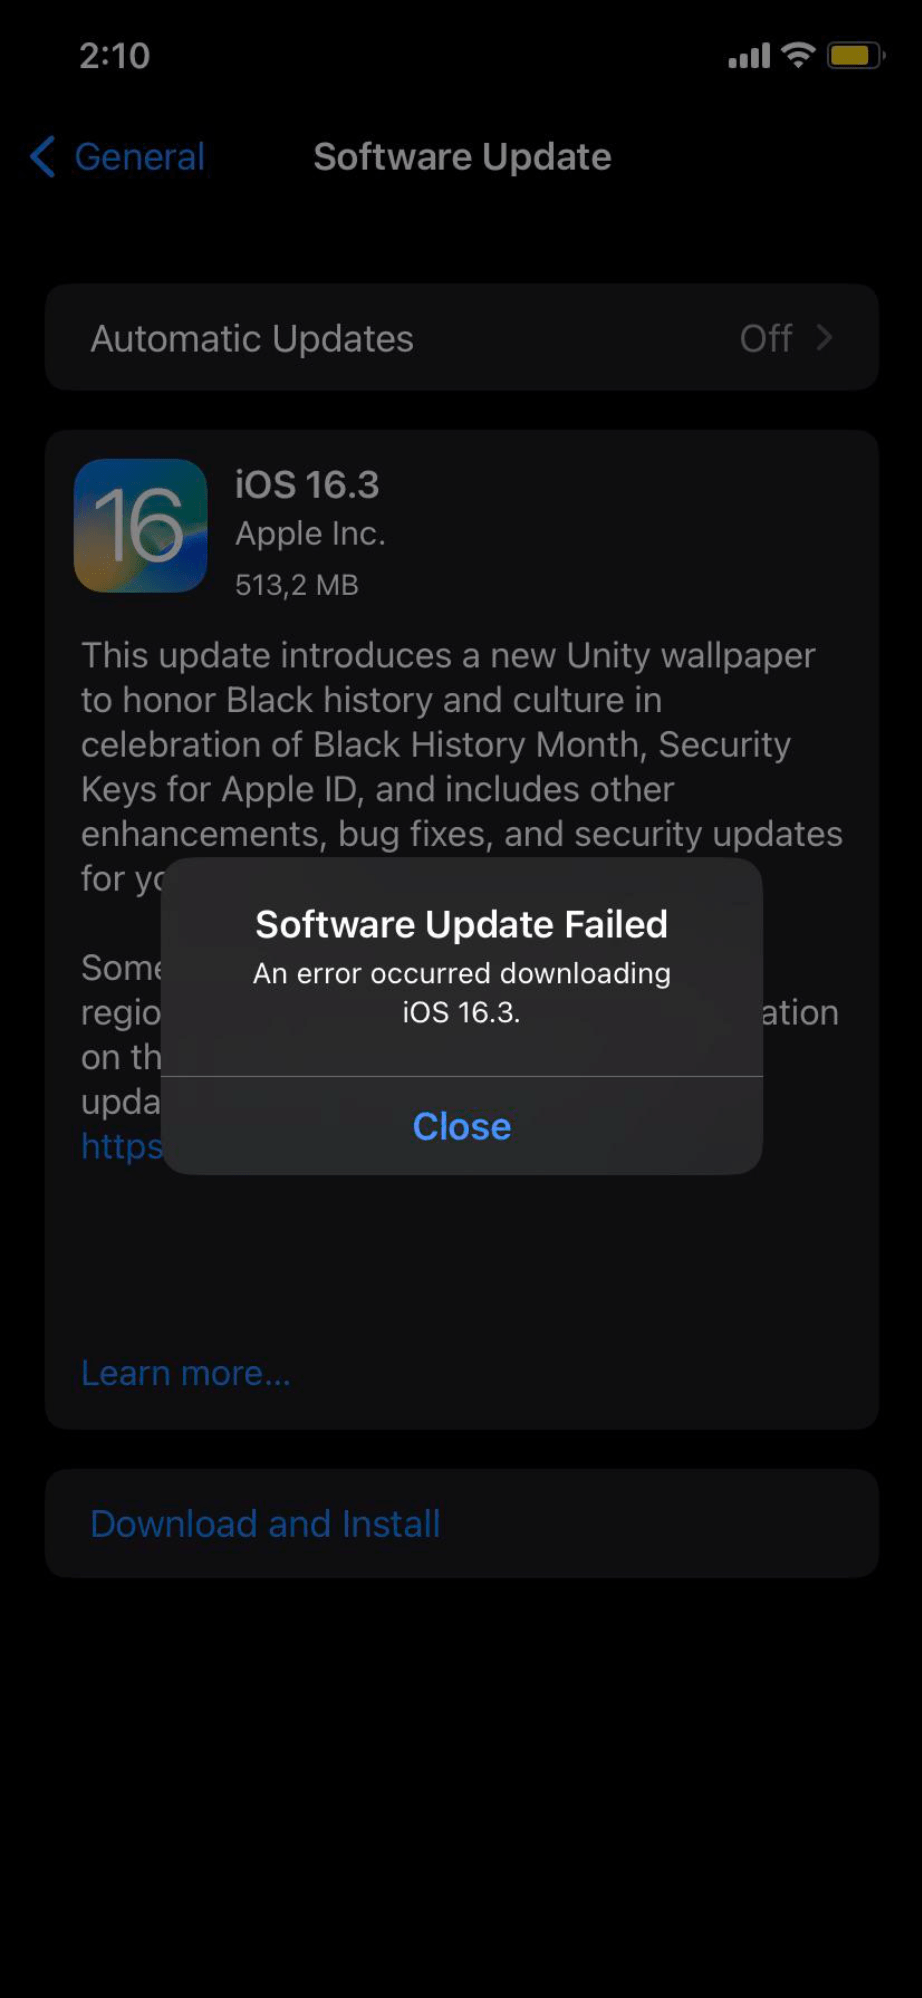 software update failed message